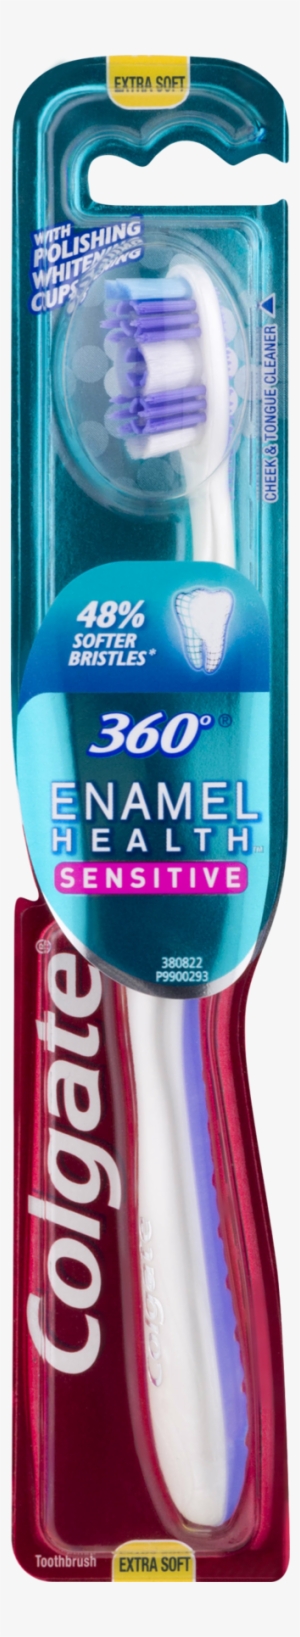 Colgate 360 Enamel Health Extra Soft Toothbrush For - Colgate